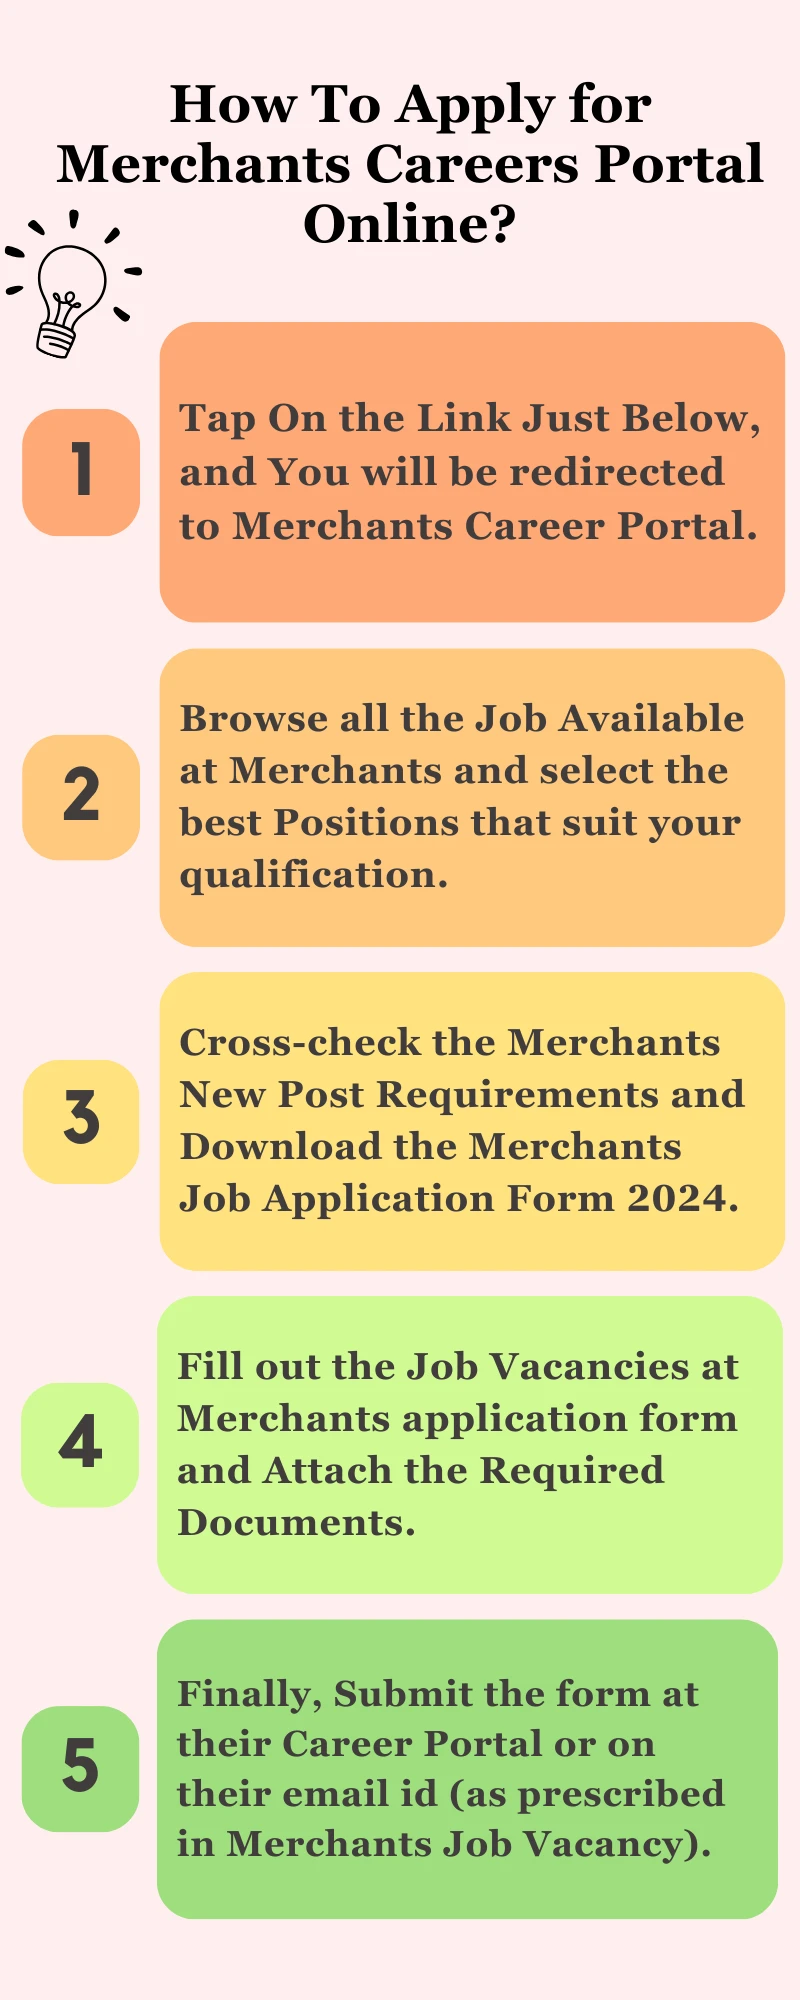 How To Apply for Merchants Careers Portal Online?